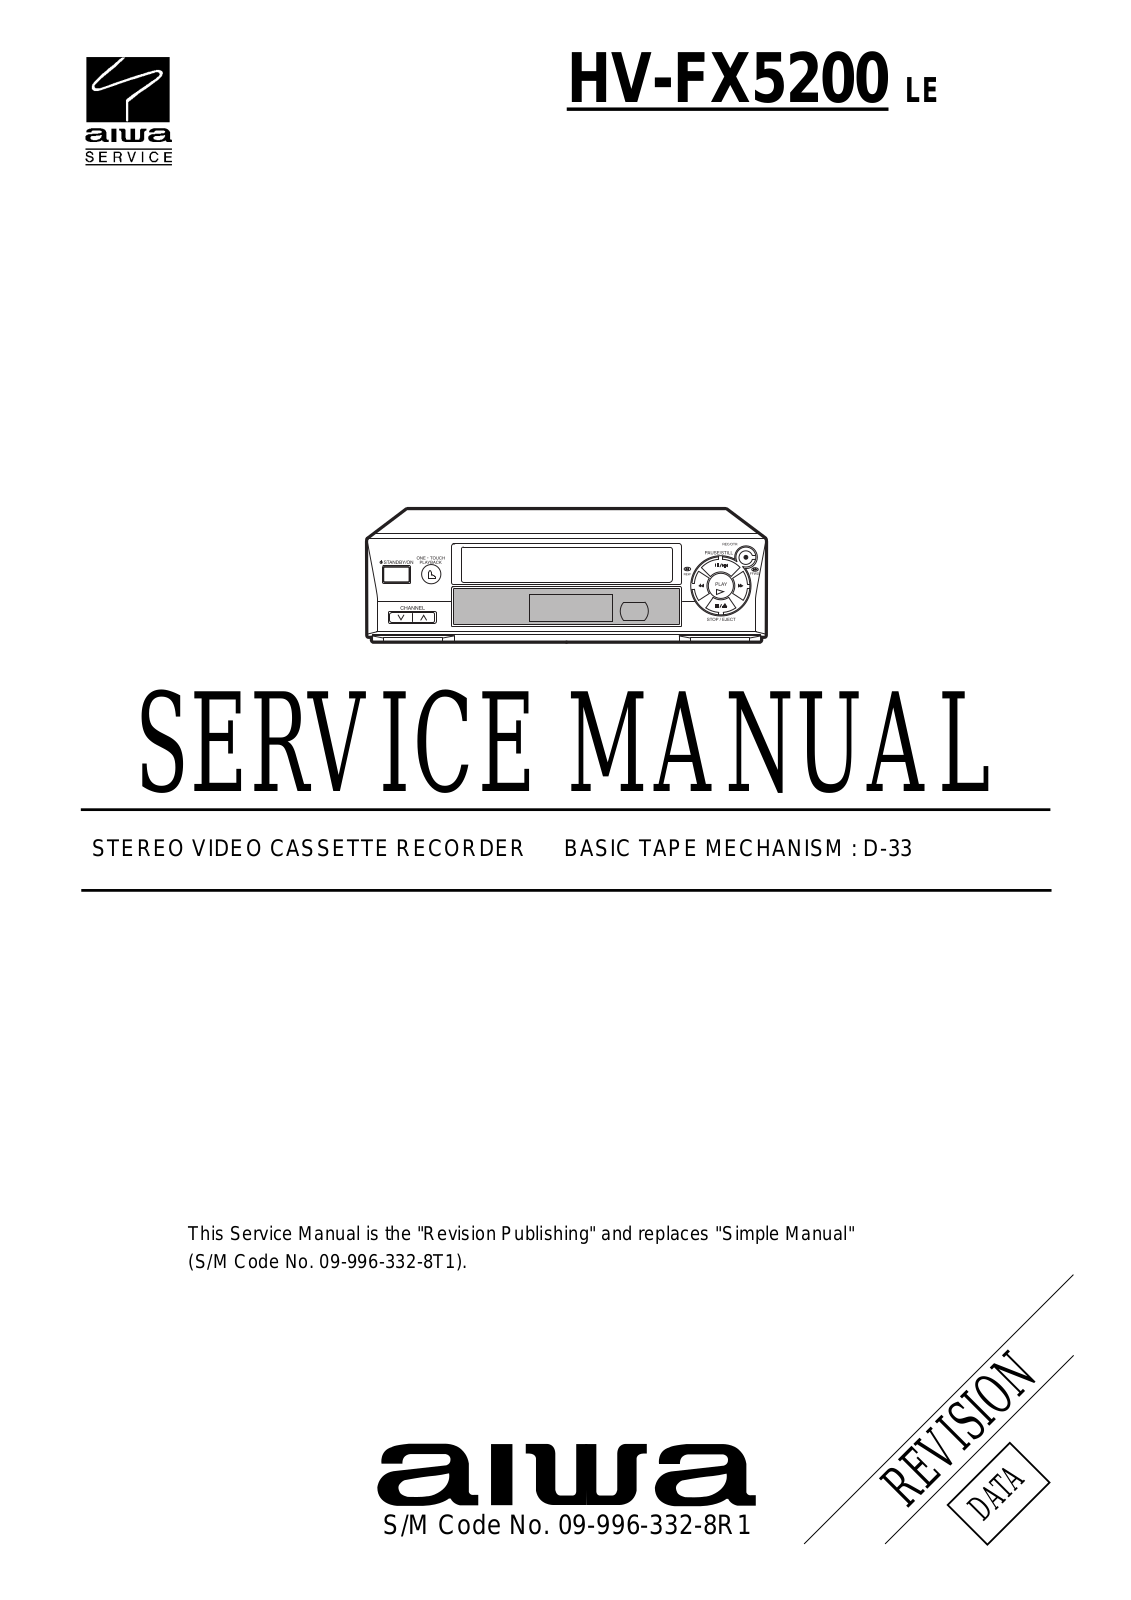 Aiwa HV-FX5200 Service Manual